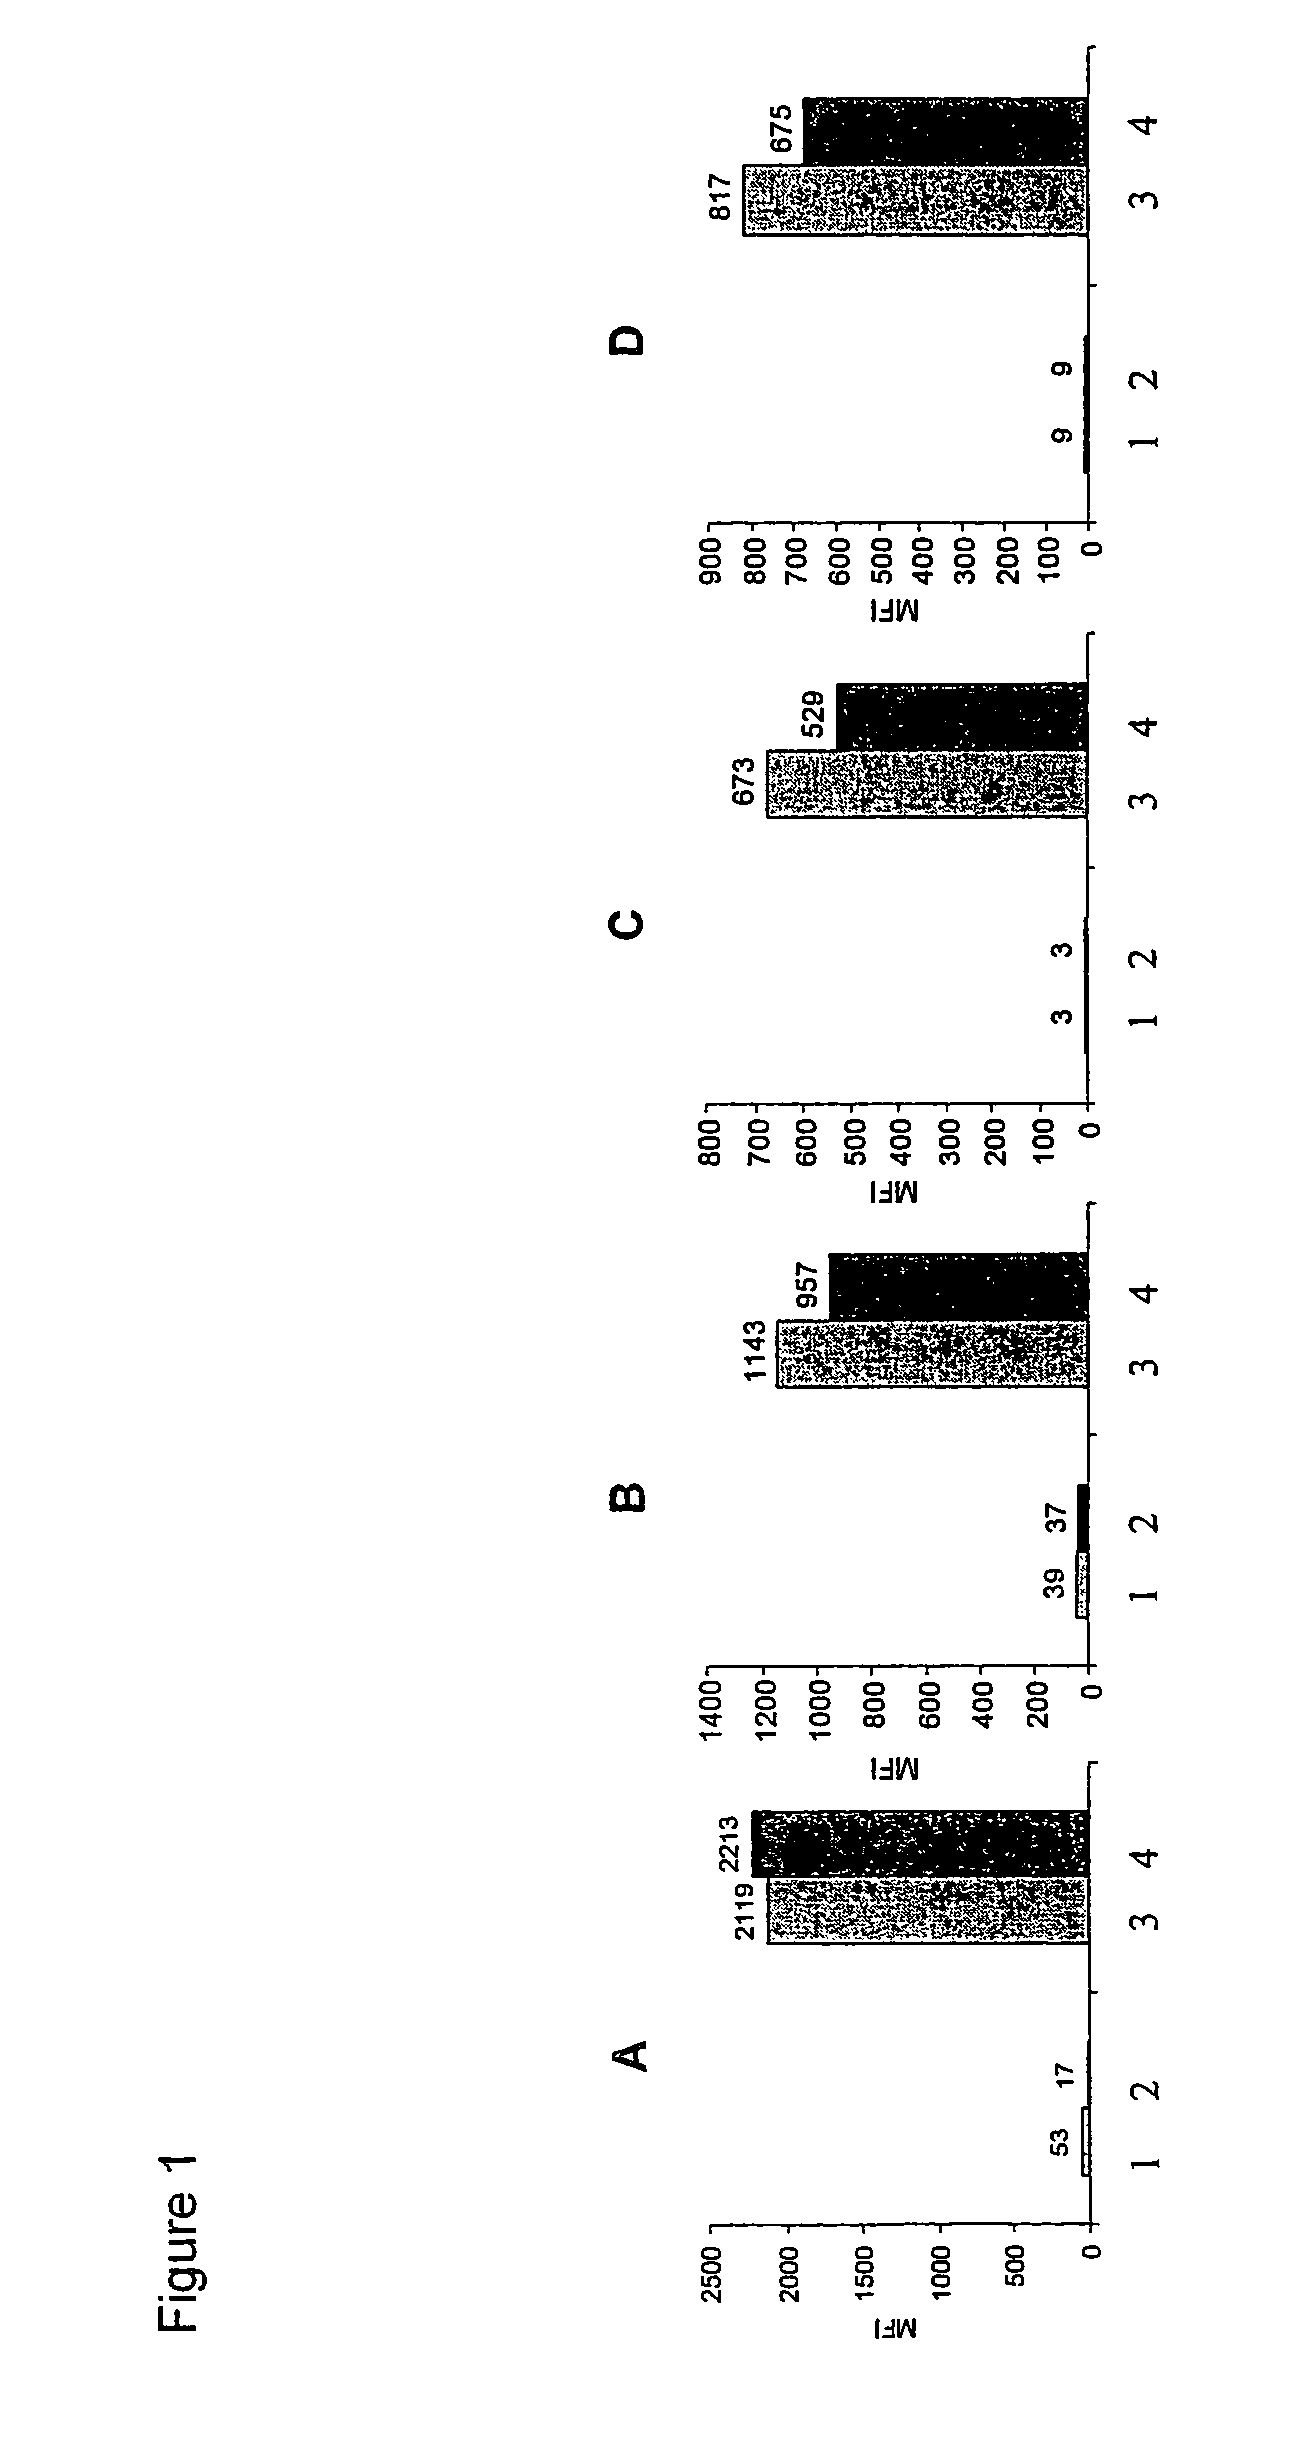 Method for measuring tyrosine kinase phosphorylation